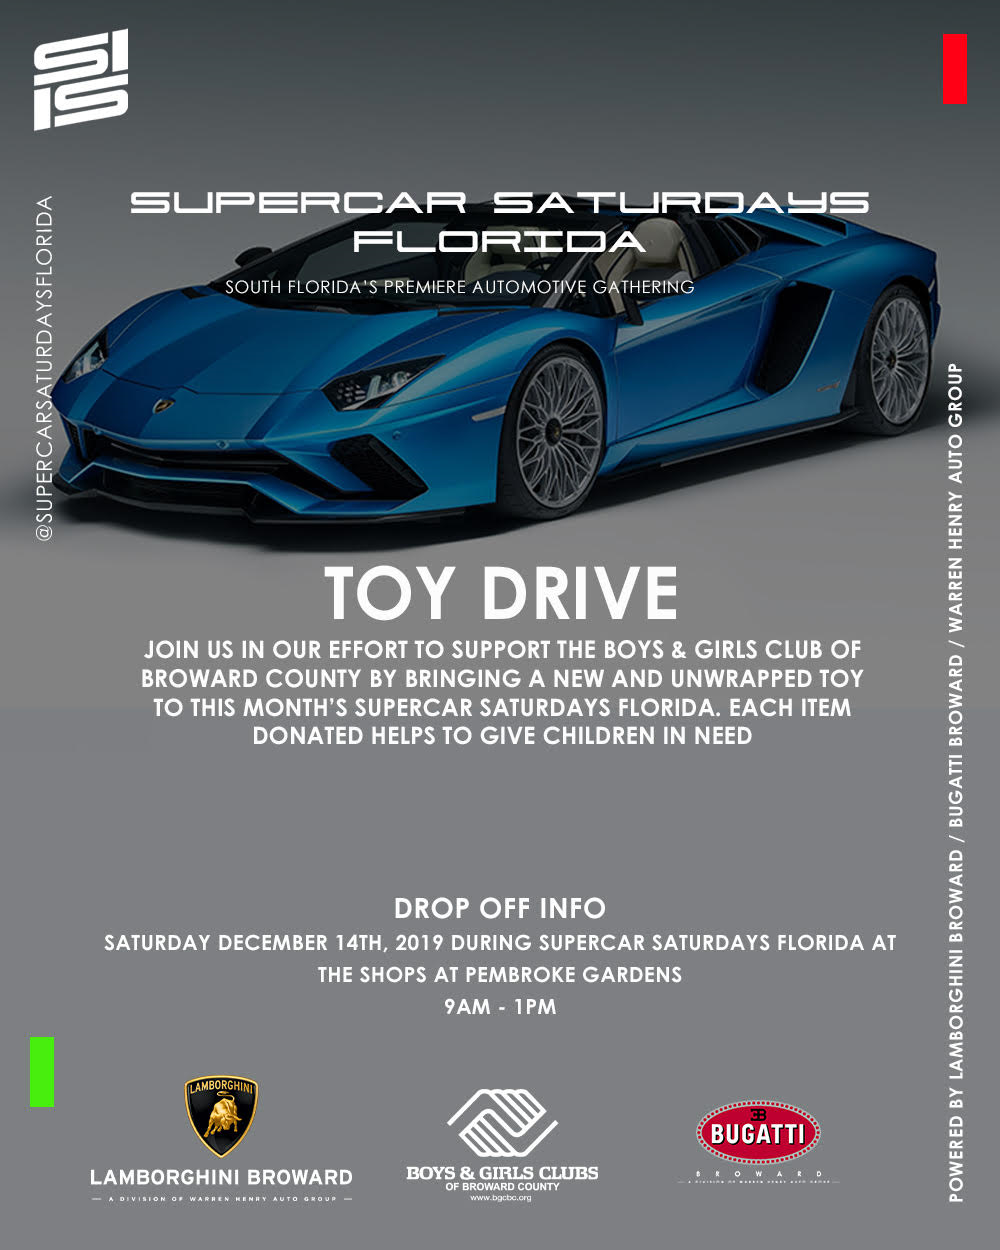 Supercar Saturdays Florida Annual Toy Drive Hosted Lamborghini